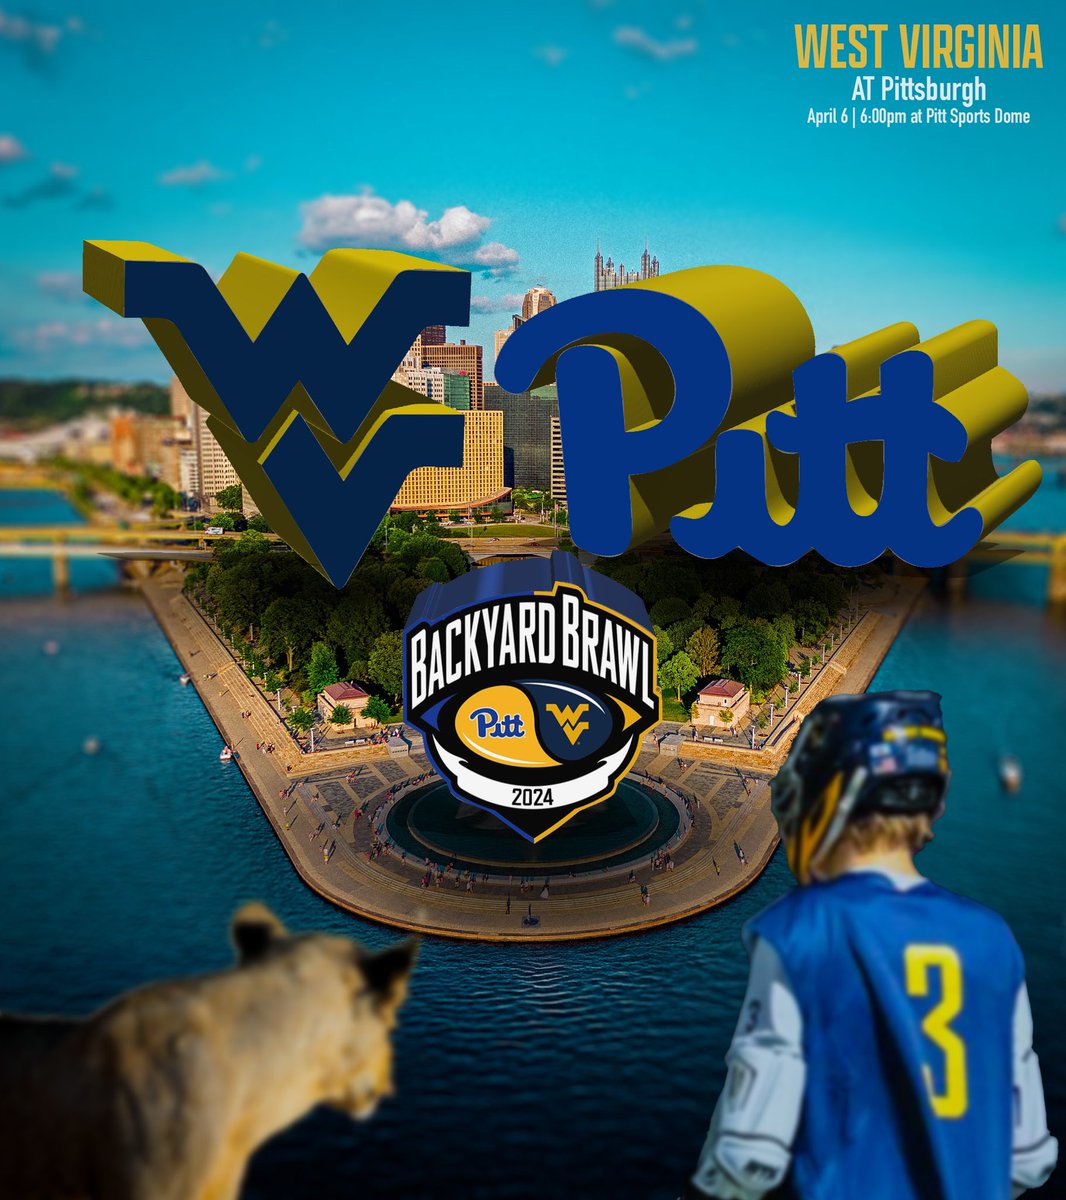 🏟️ Game 10: 2024 Backyard Brawl: WVU at Pitt 📍 University of Pittsburgh Sports Dome 570 Champions Dr, Pittsburgh 🕕 Saturday, April 6th at 6:00 pm 💻 LiveStream with @wvuheart begins at 5:50 pm 🔗 LiveStream link: youtube.com/@wvumenslacros… #letsgo 🖥️ @cadeng88